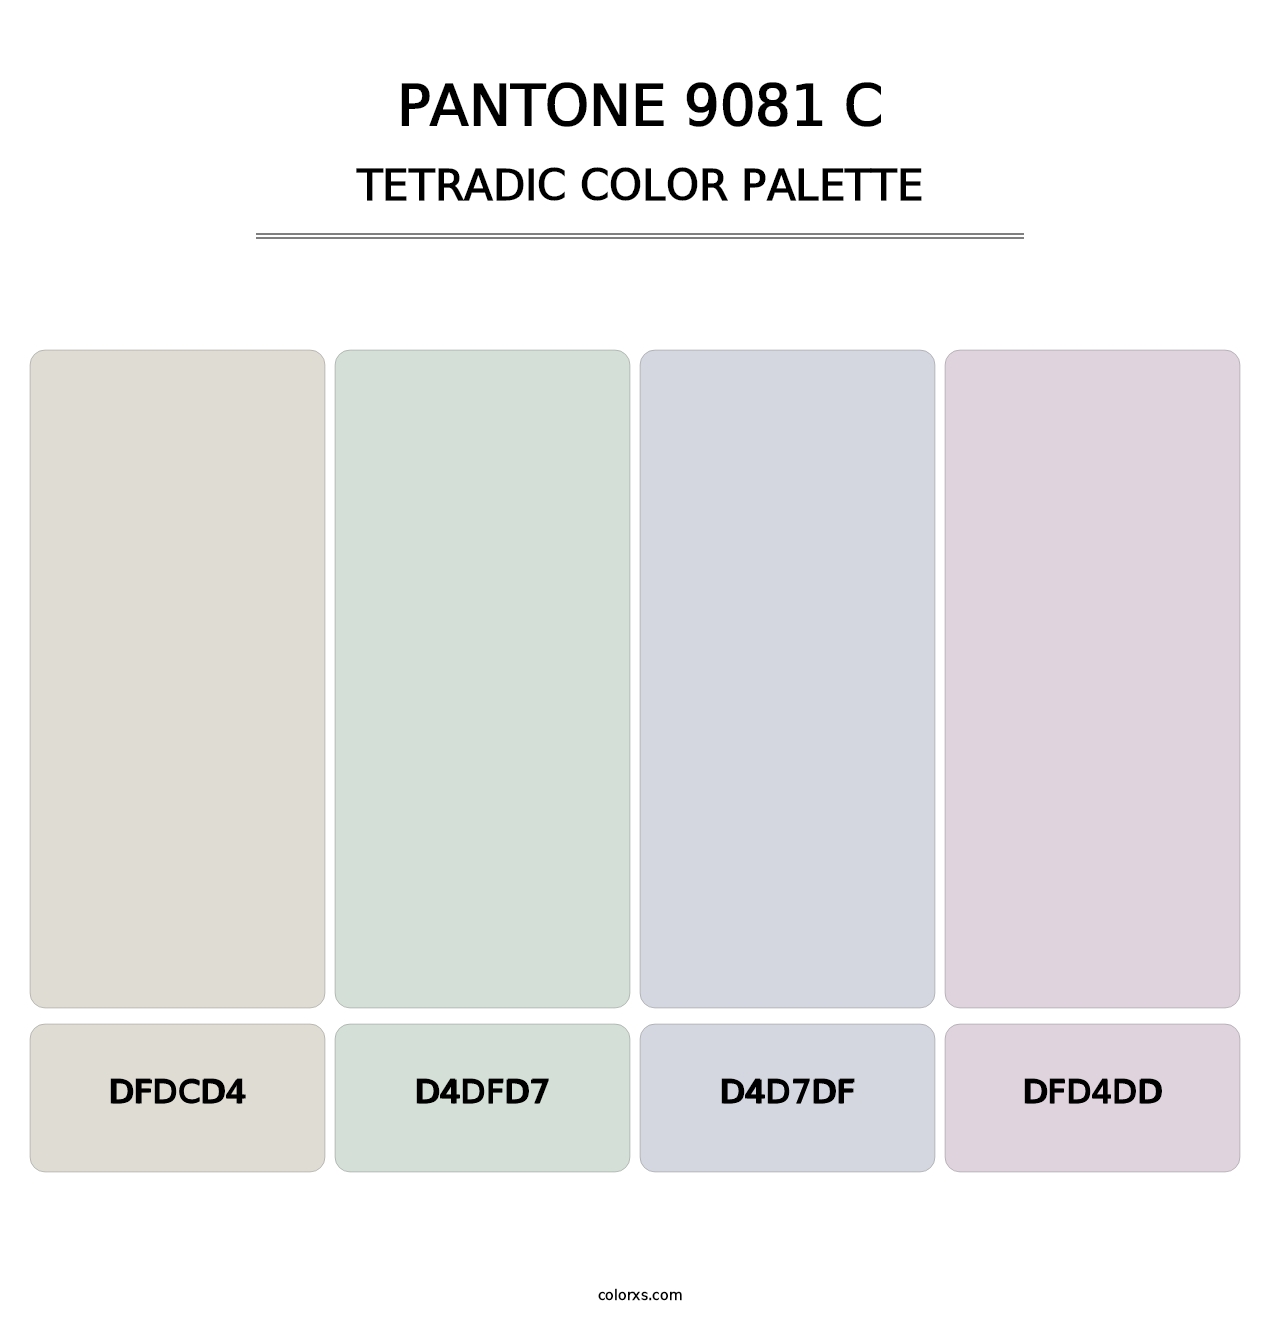 PANTONE 9081 C - Tetradic Color Palette